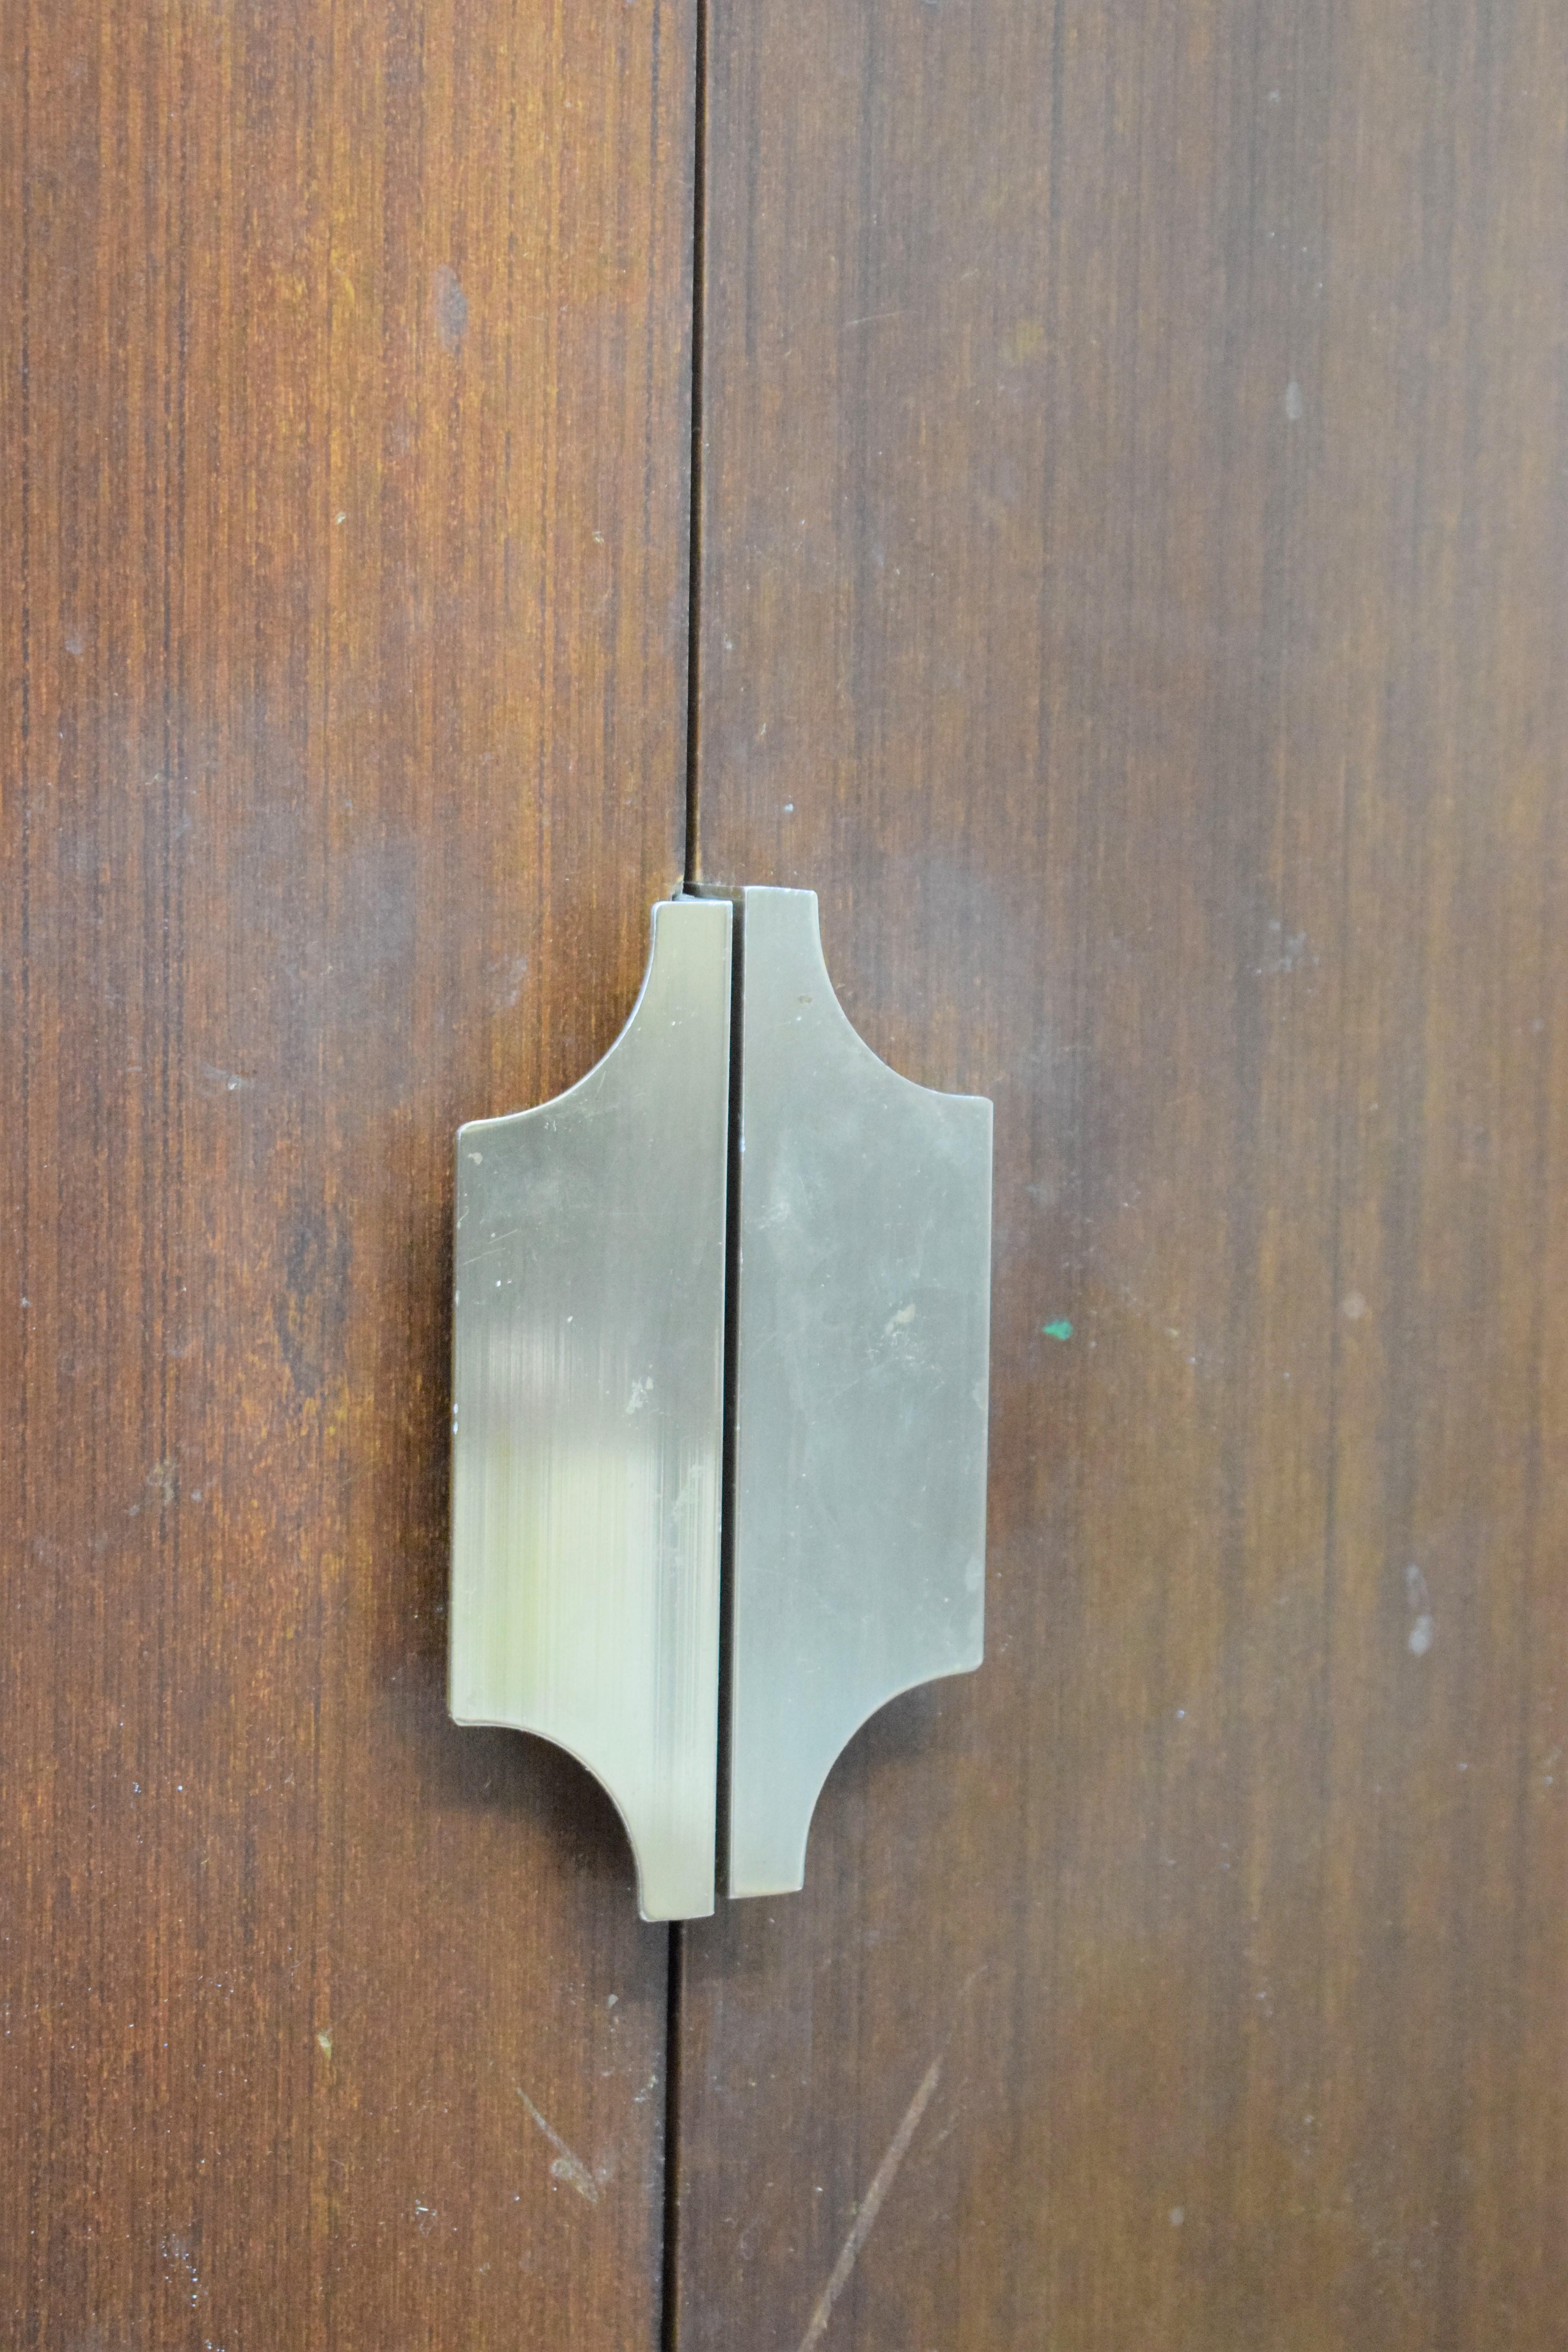 Italian wood and brass wardrobe, 1960s.
Dimensions: H=180 cm; W=121 cm; D=60 cm.